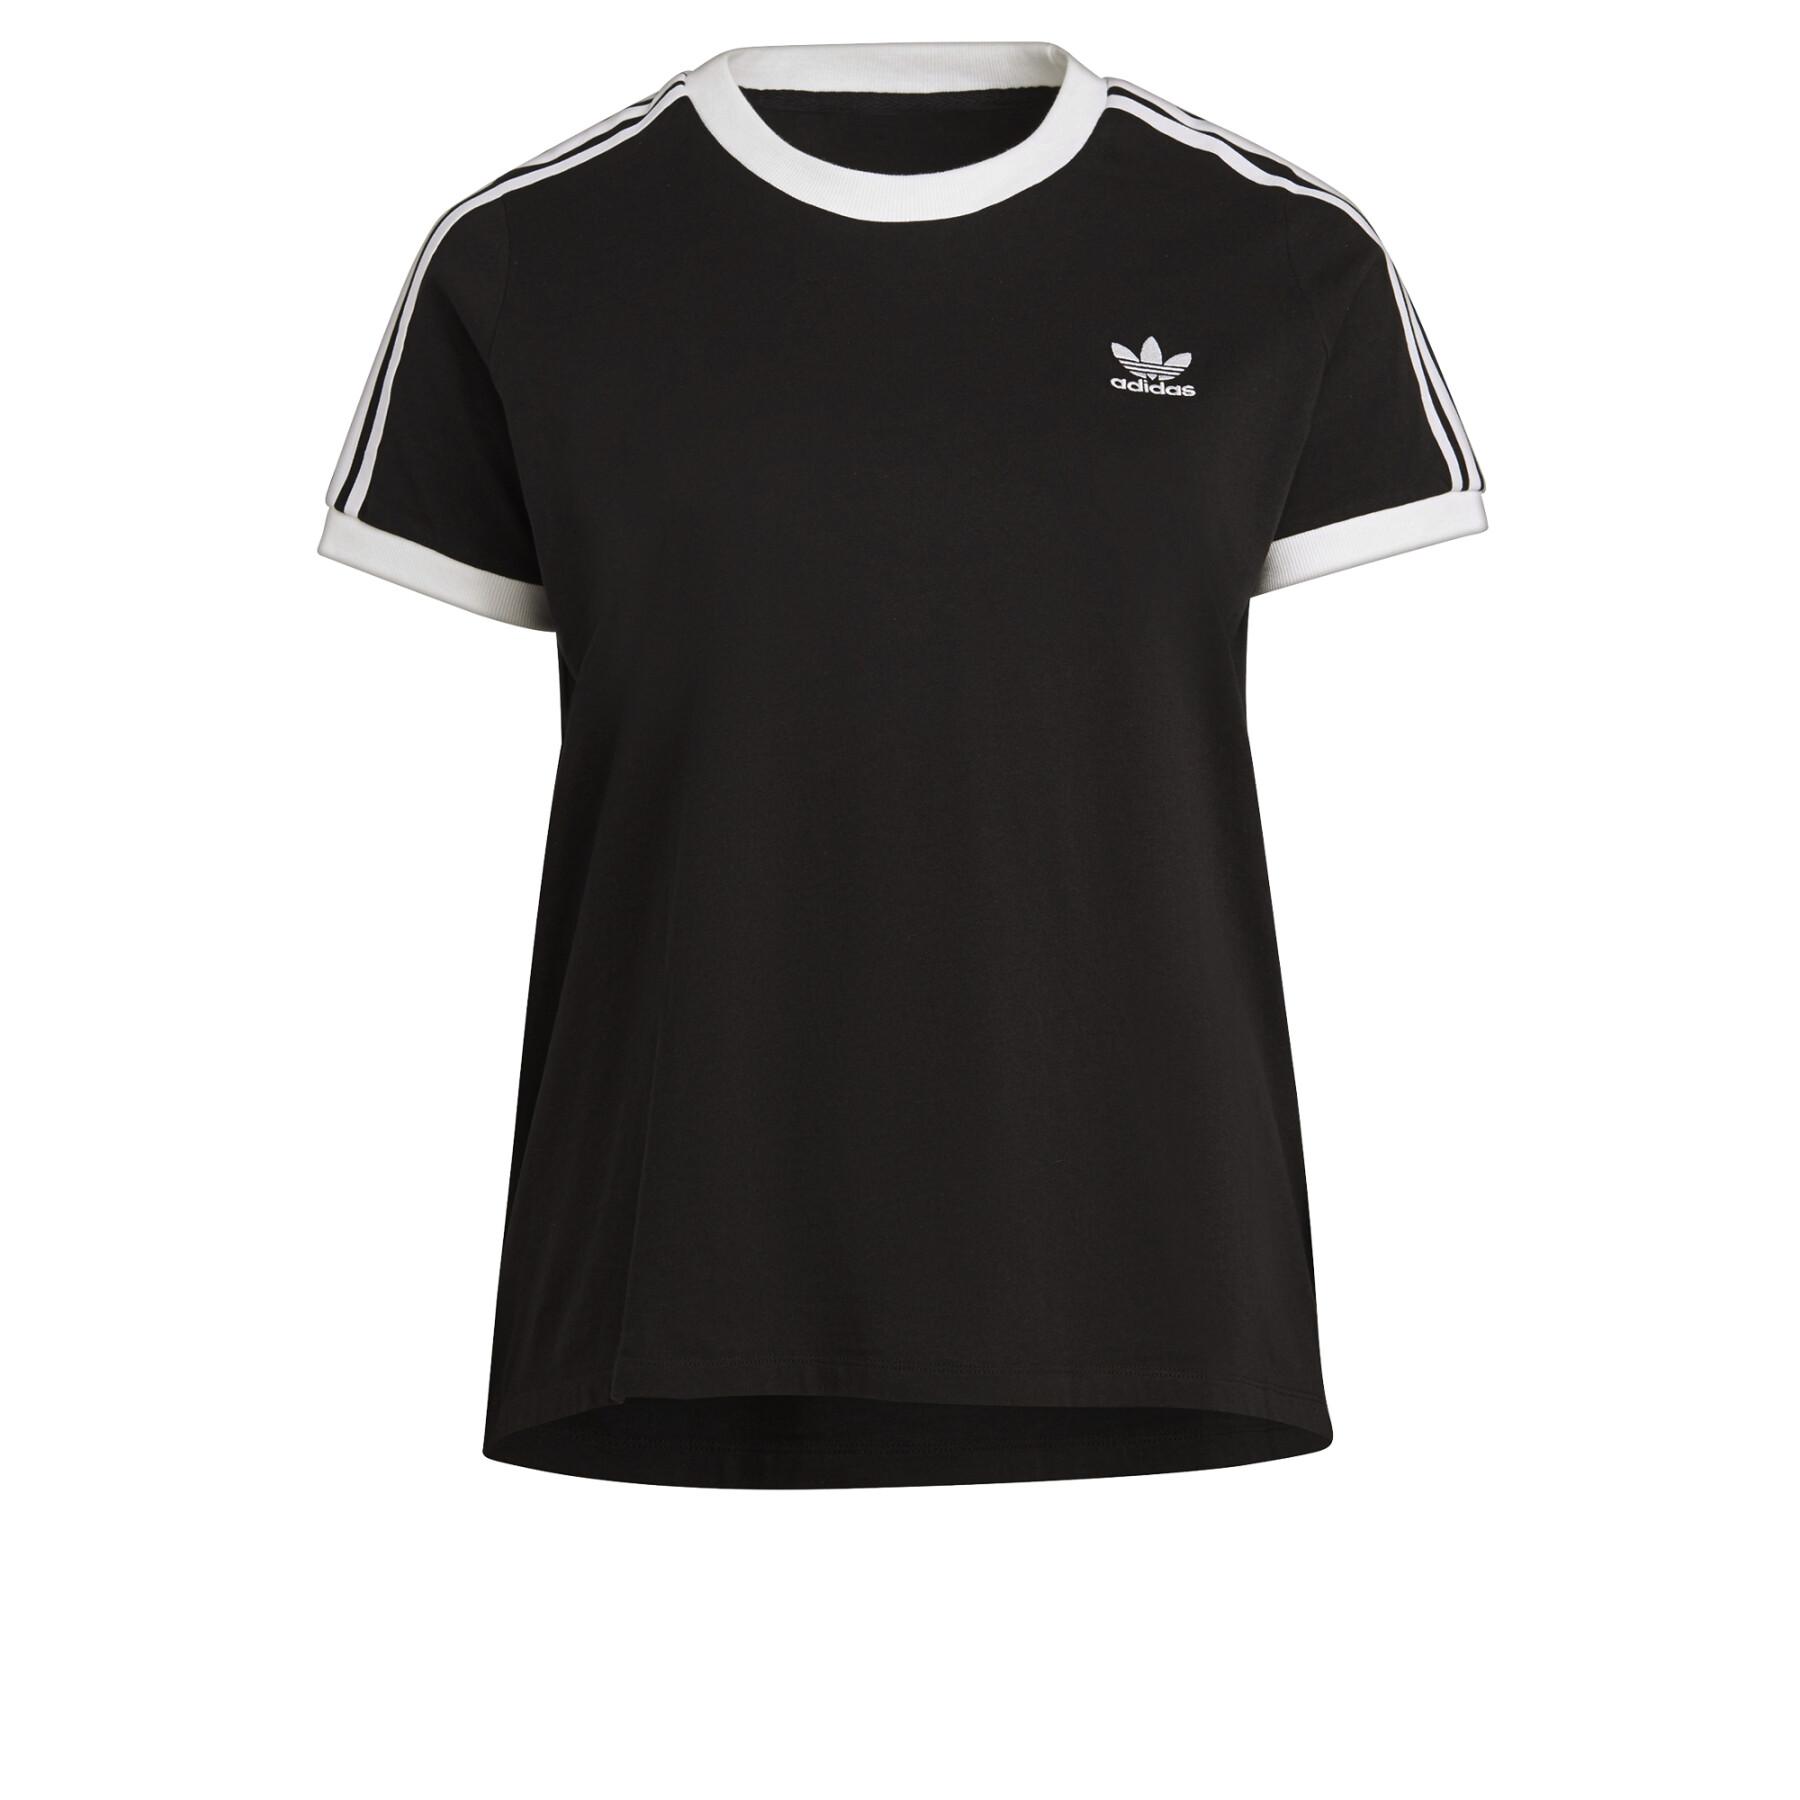 Camiseta mujer adidas Originals Adicolor s 3-Stripes (Grandes tailles) - Camisetas - Camisetas y camisetas sin mangas - Ropa mujer